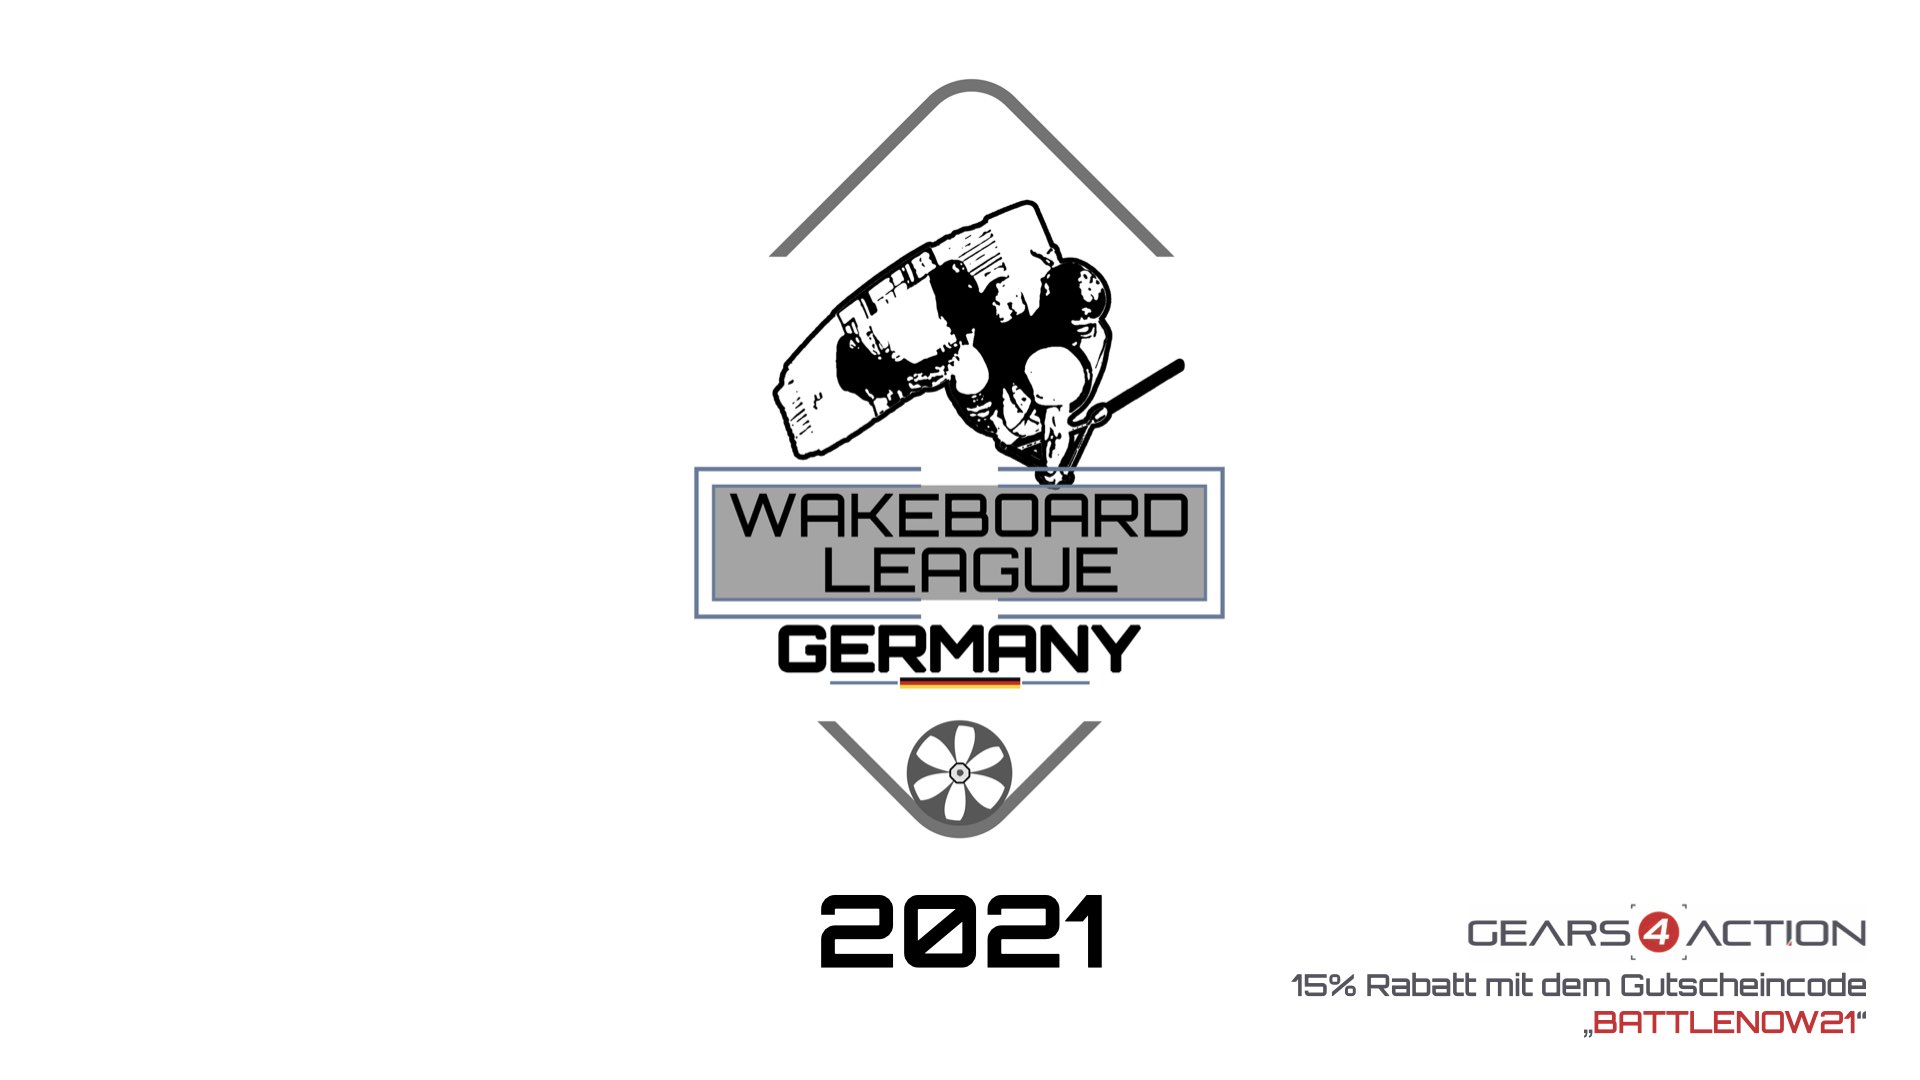 Wakeboard League Germany 2021